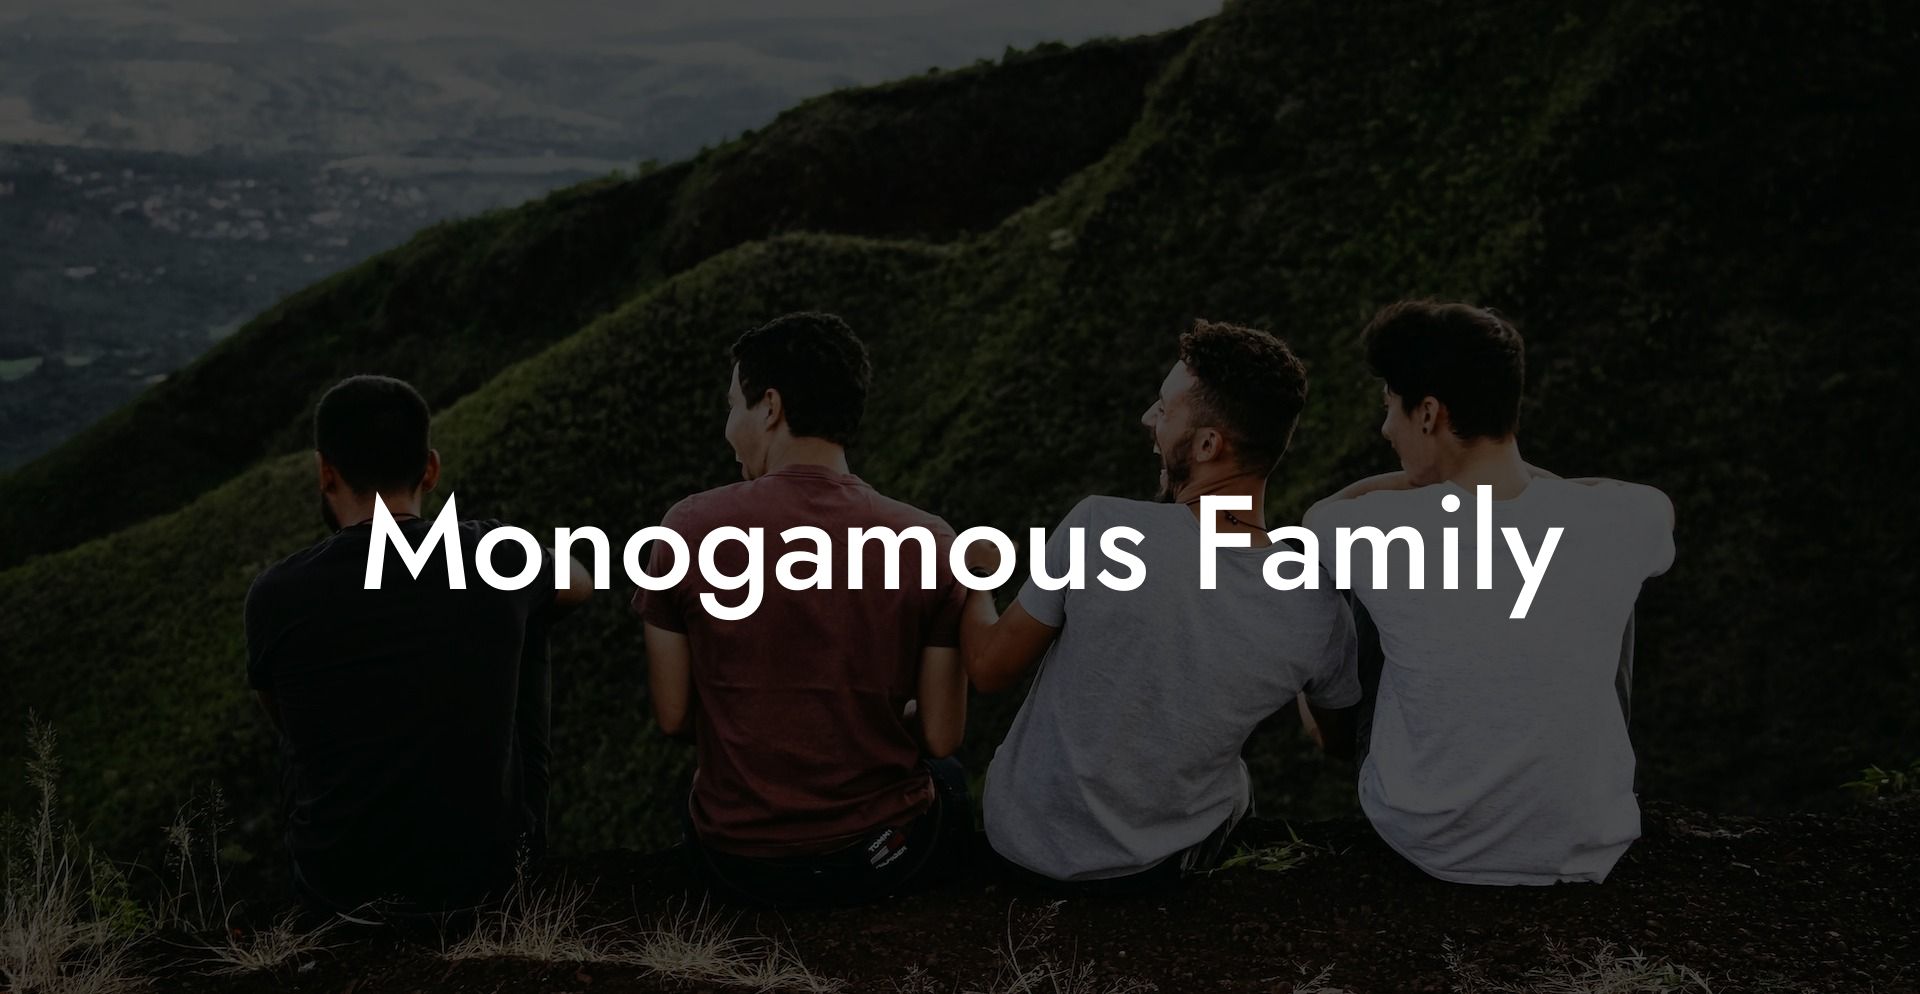 Monogamous Family